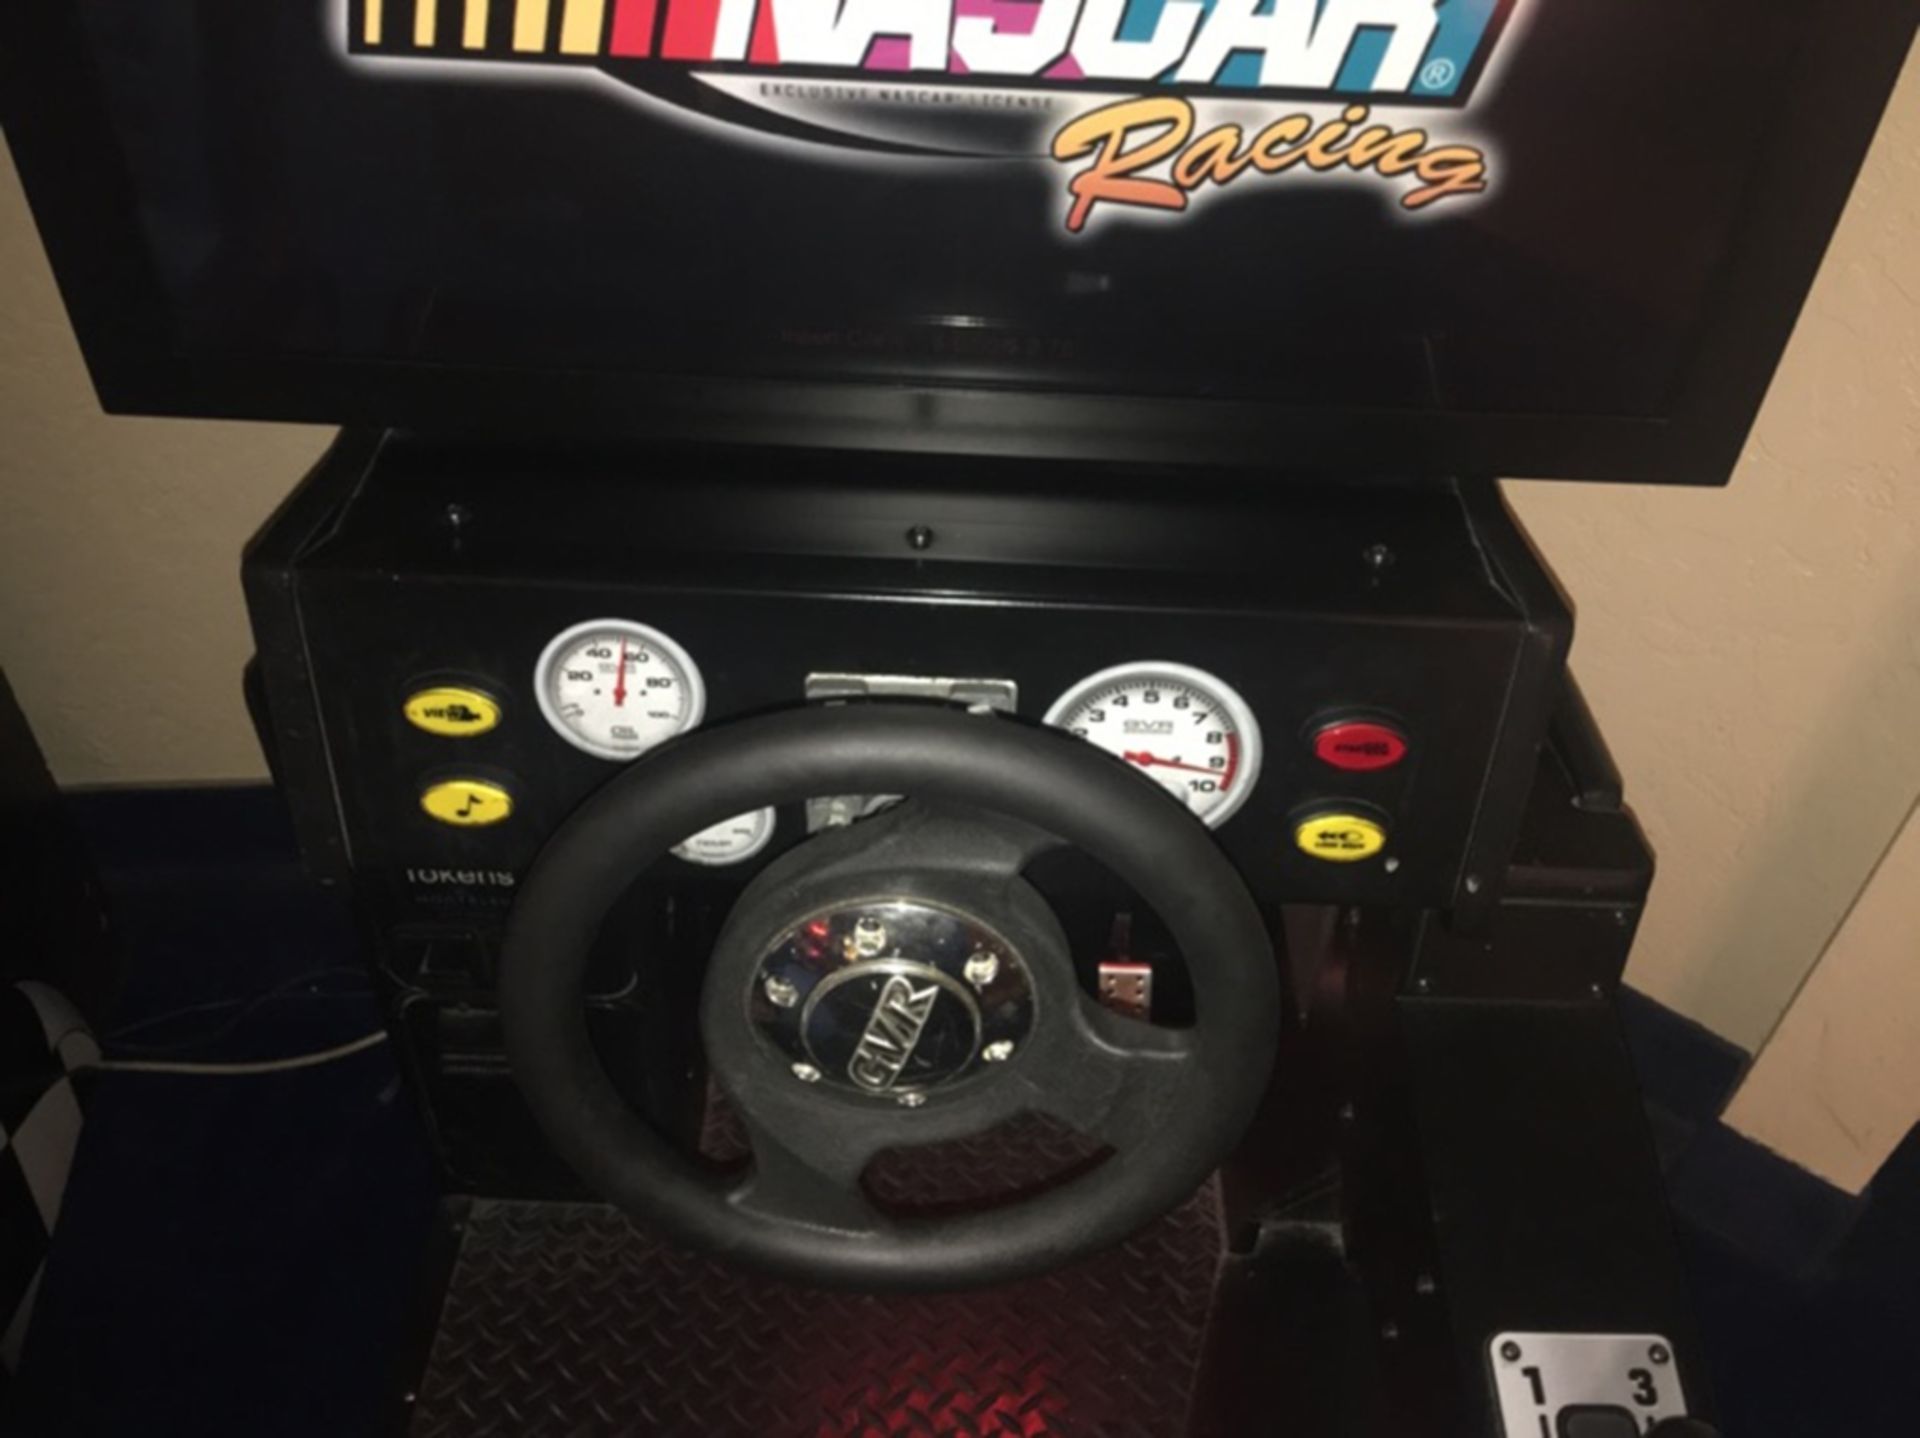 NASCAR RACING 32" LCD ARCADE GAME GLOBAL VR - Image 5 of 9